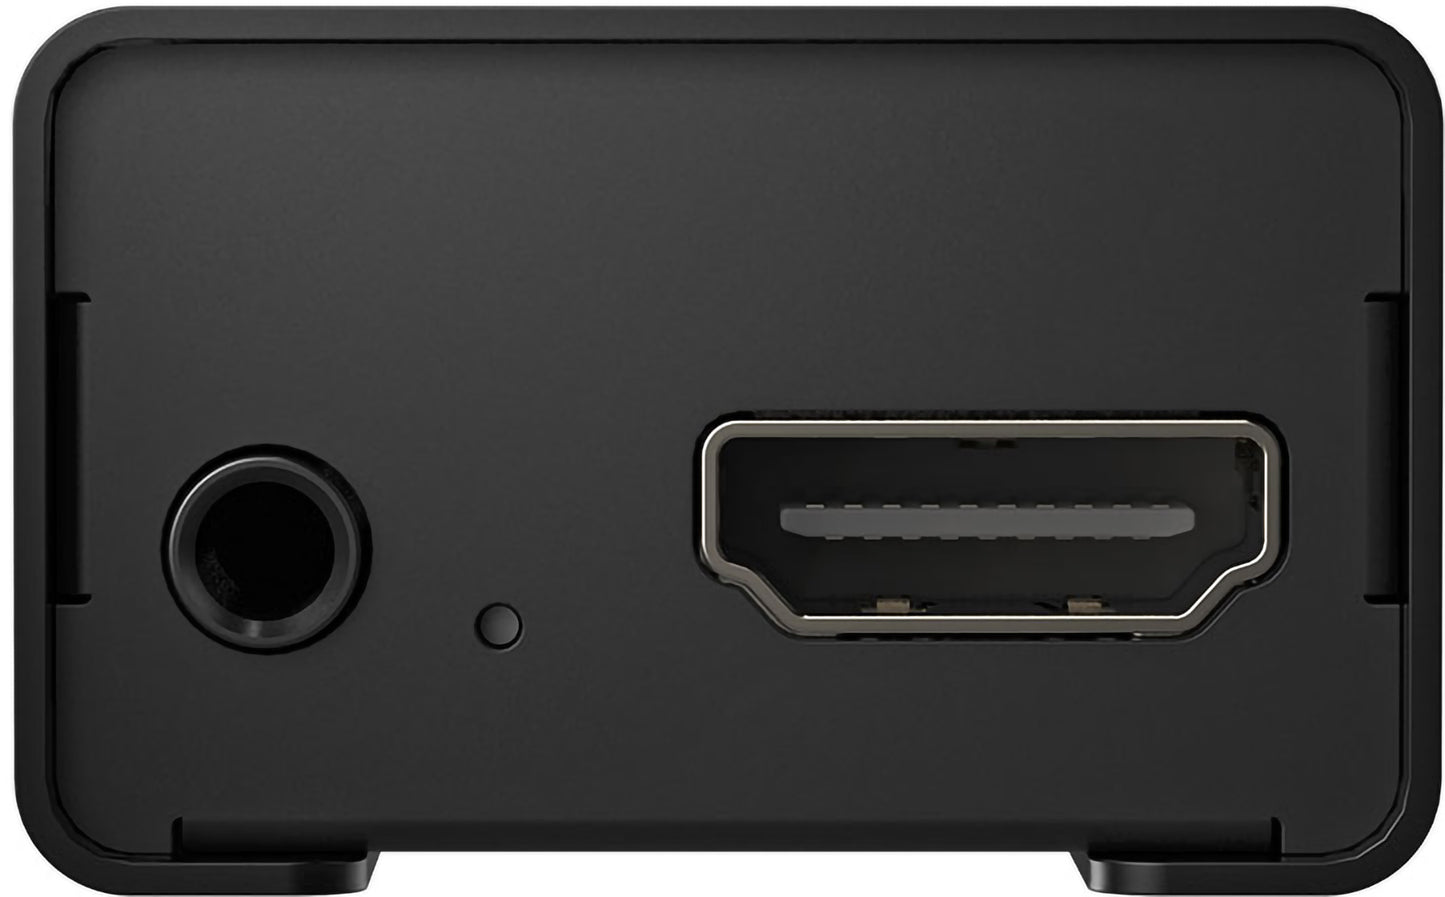 Roland UVC-01 USB Capture HDMI